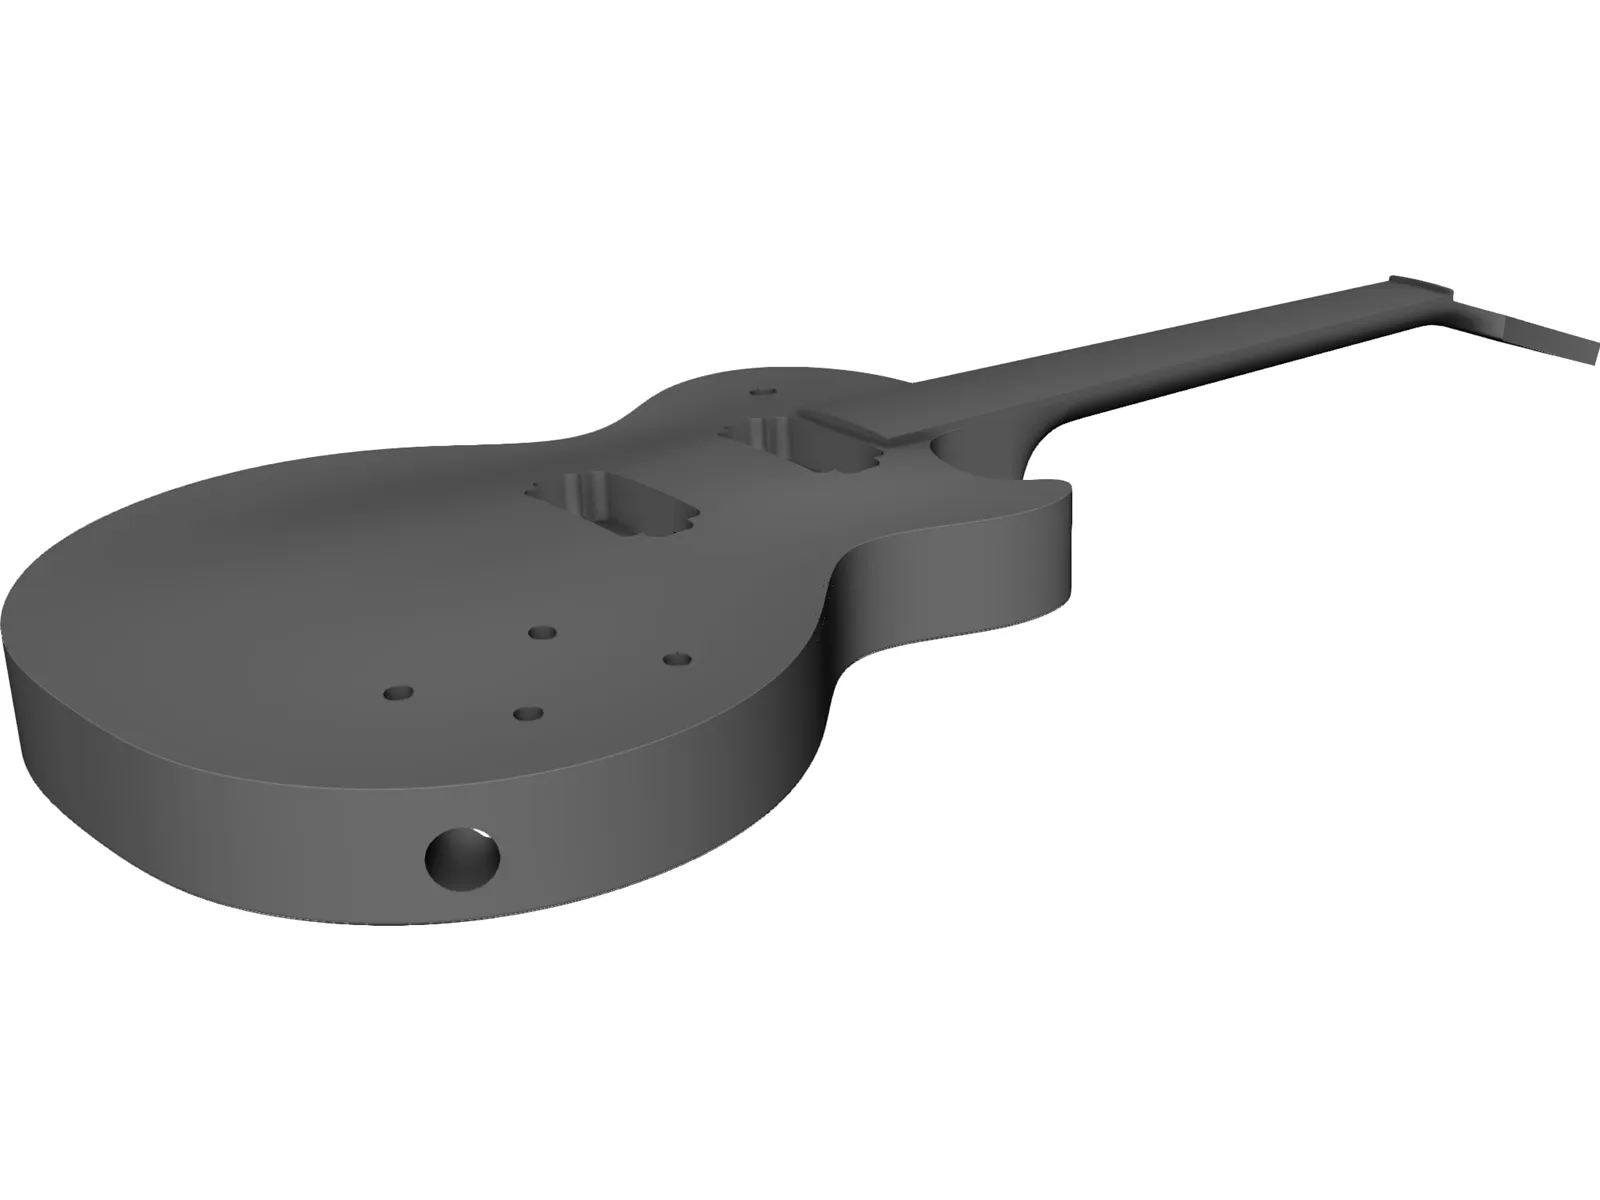 Gibson Les Paul Standard Guitar Body 3D Model